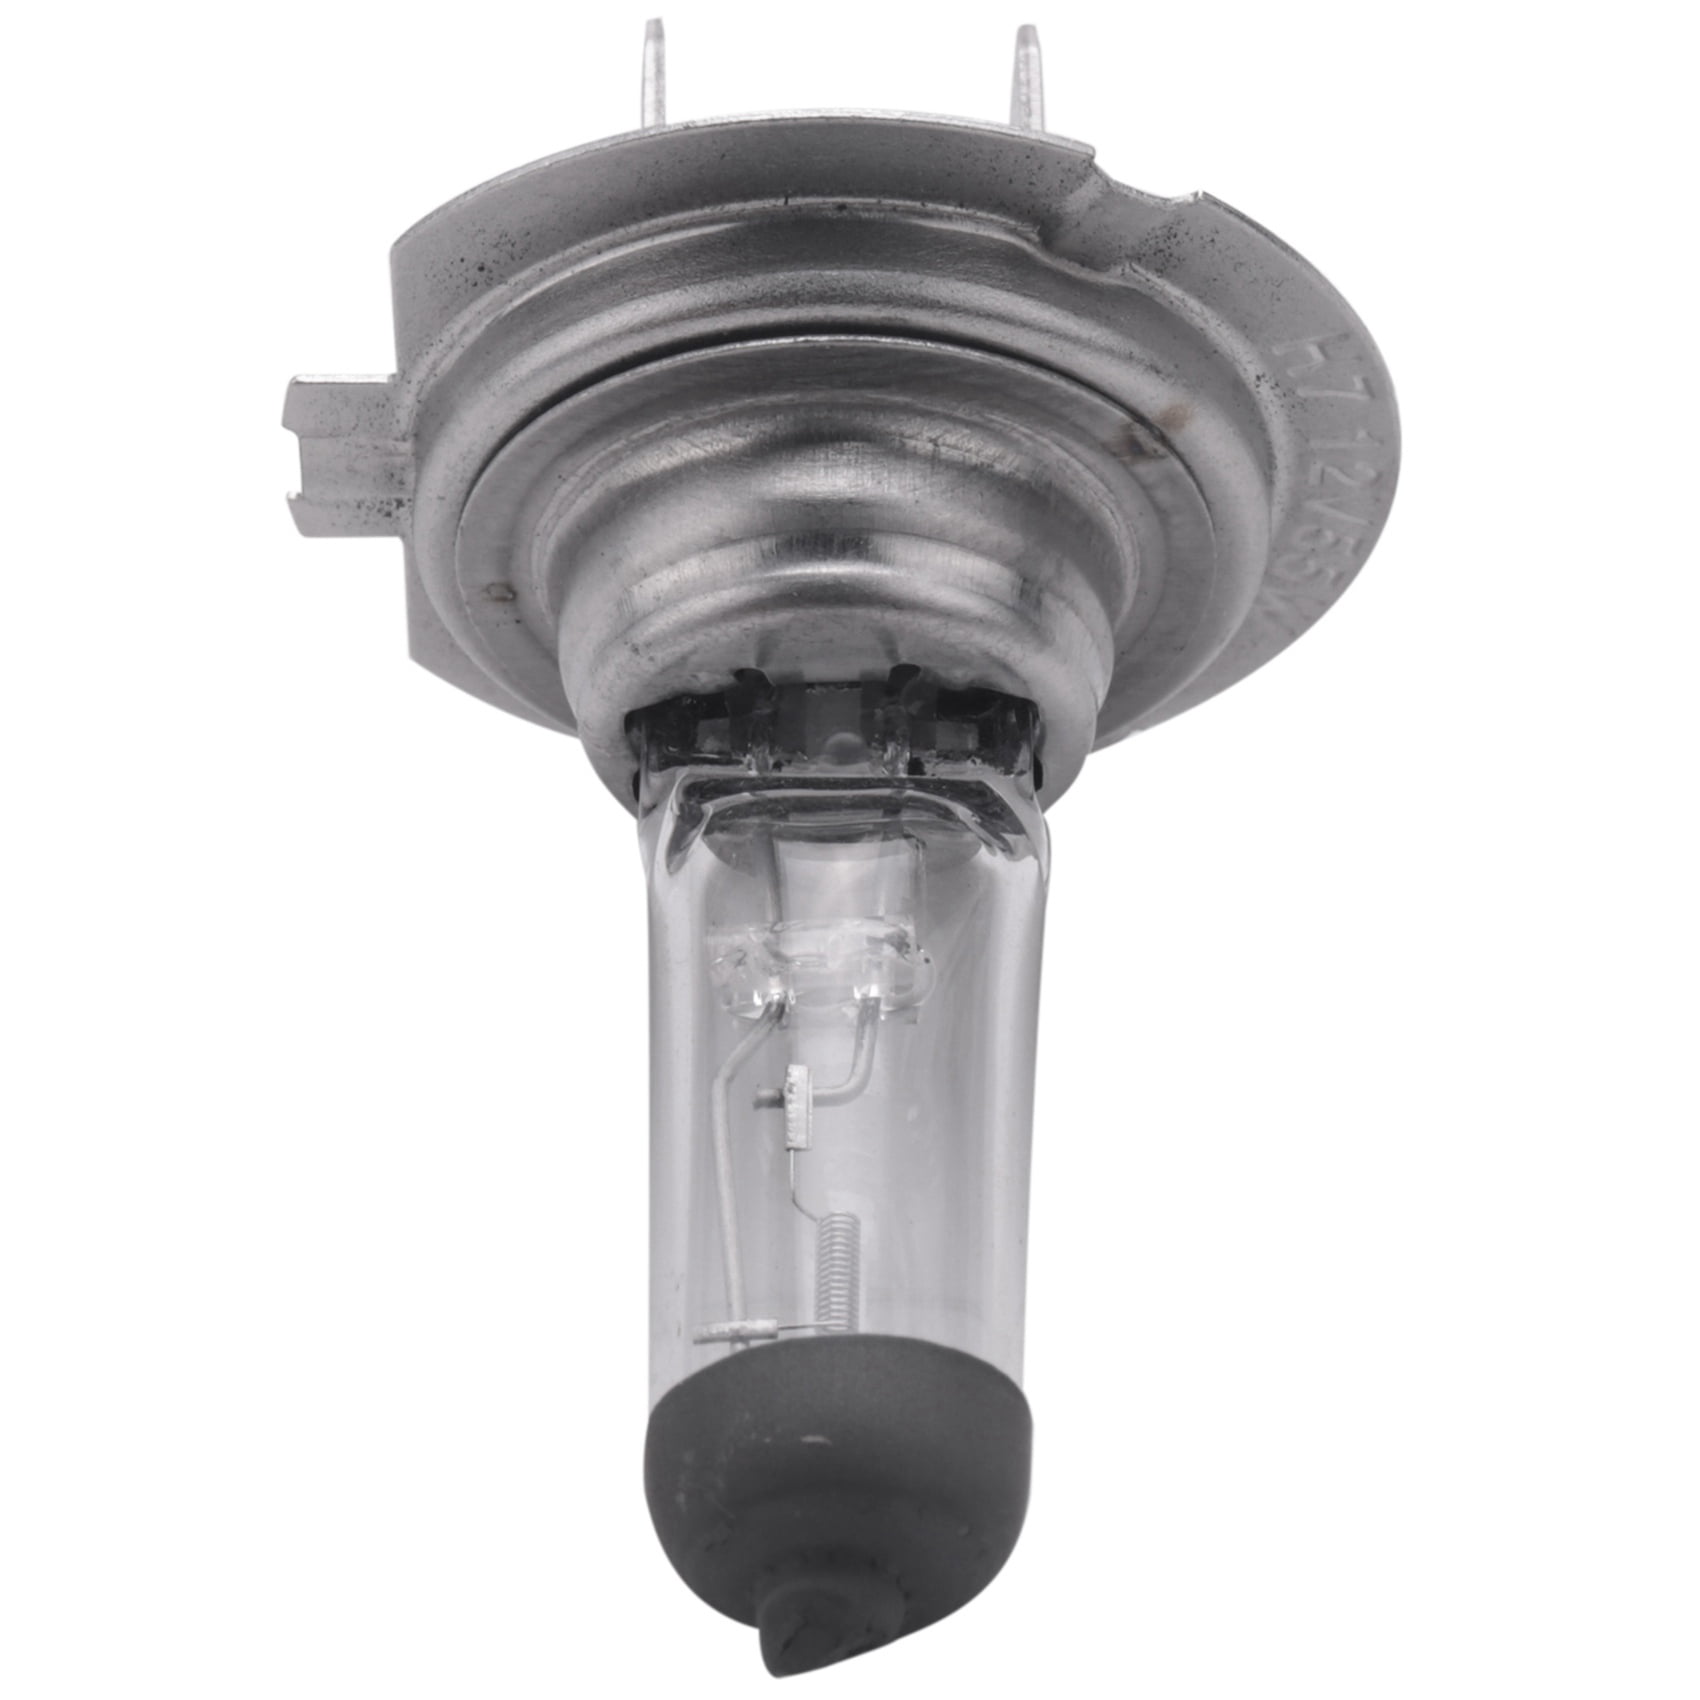 Car bulb head light lamp H7 12V 55W PX26d halogen xenon bulb Y5M2 477/499 